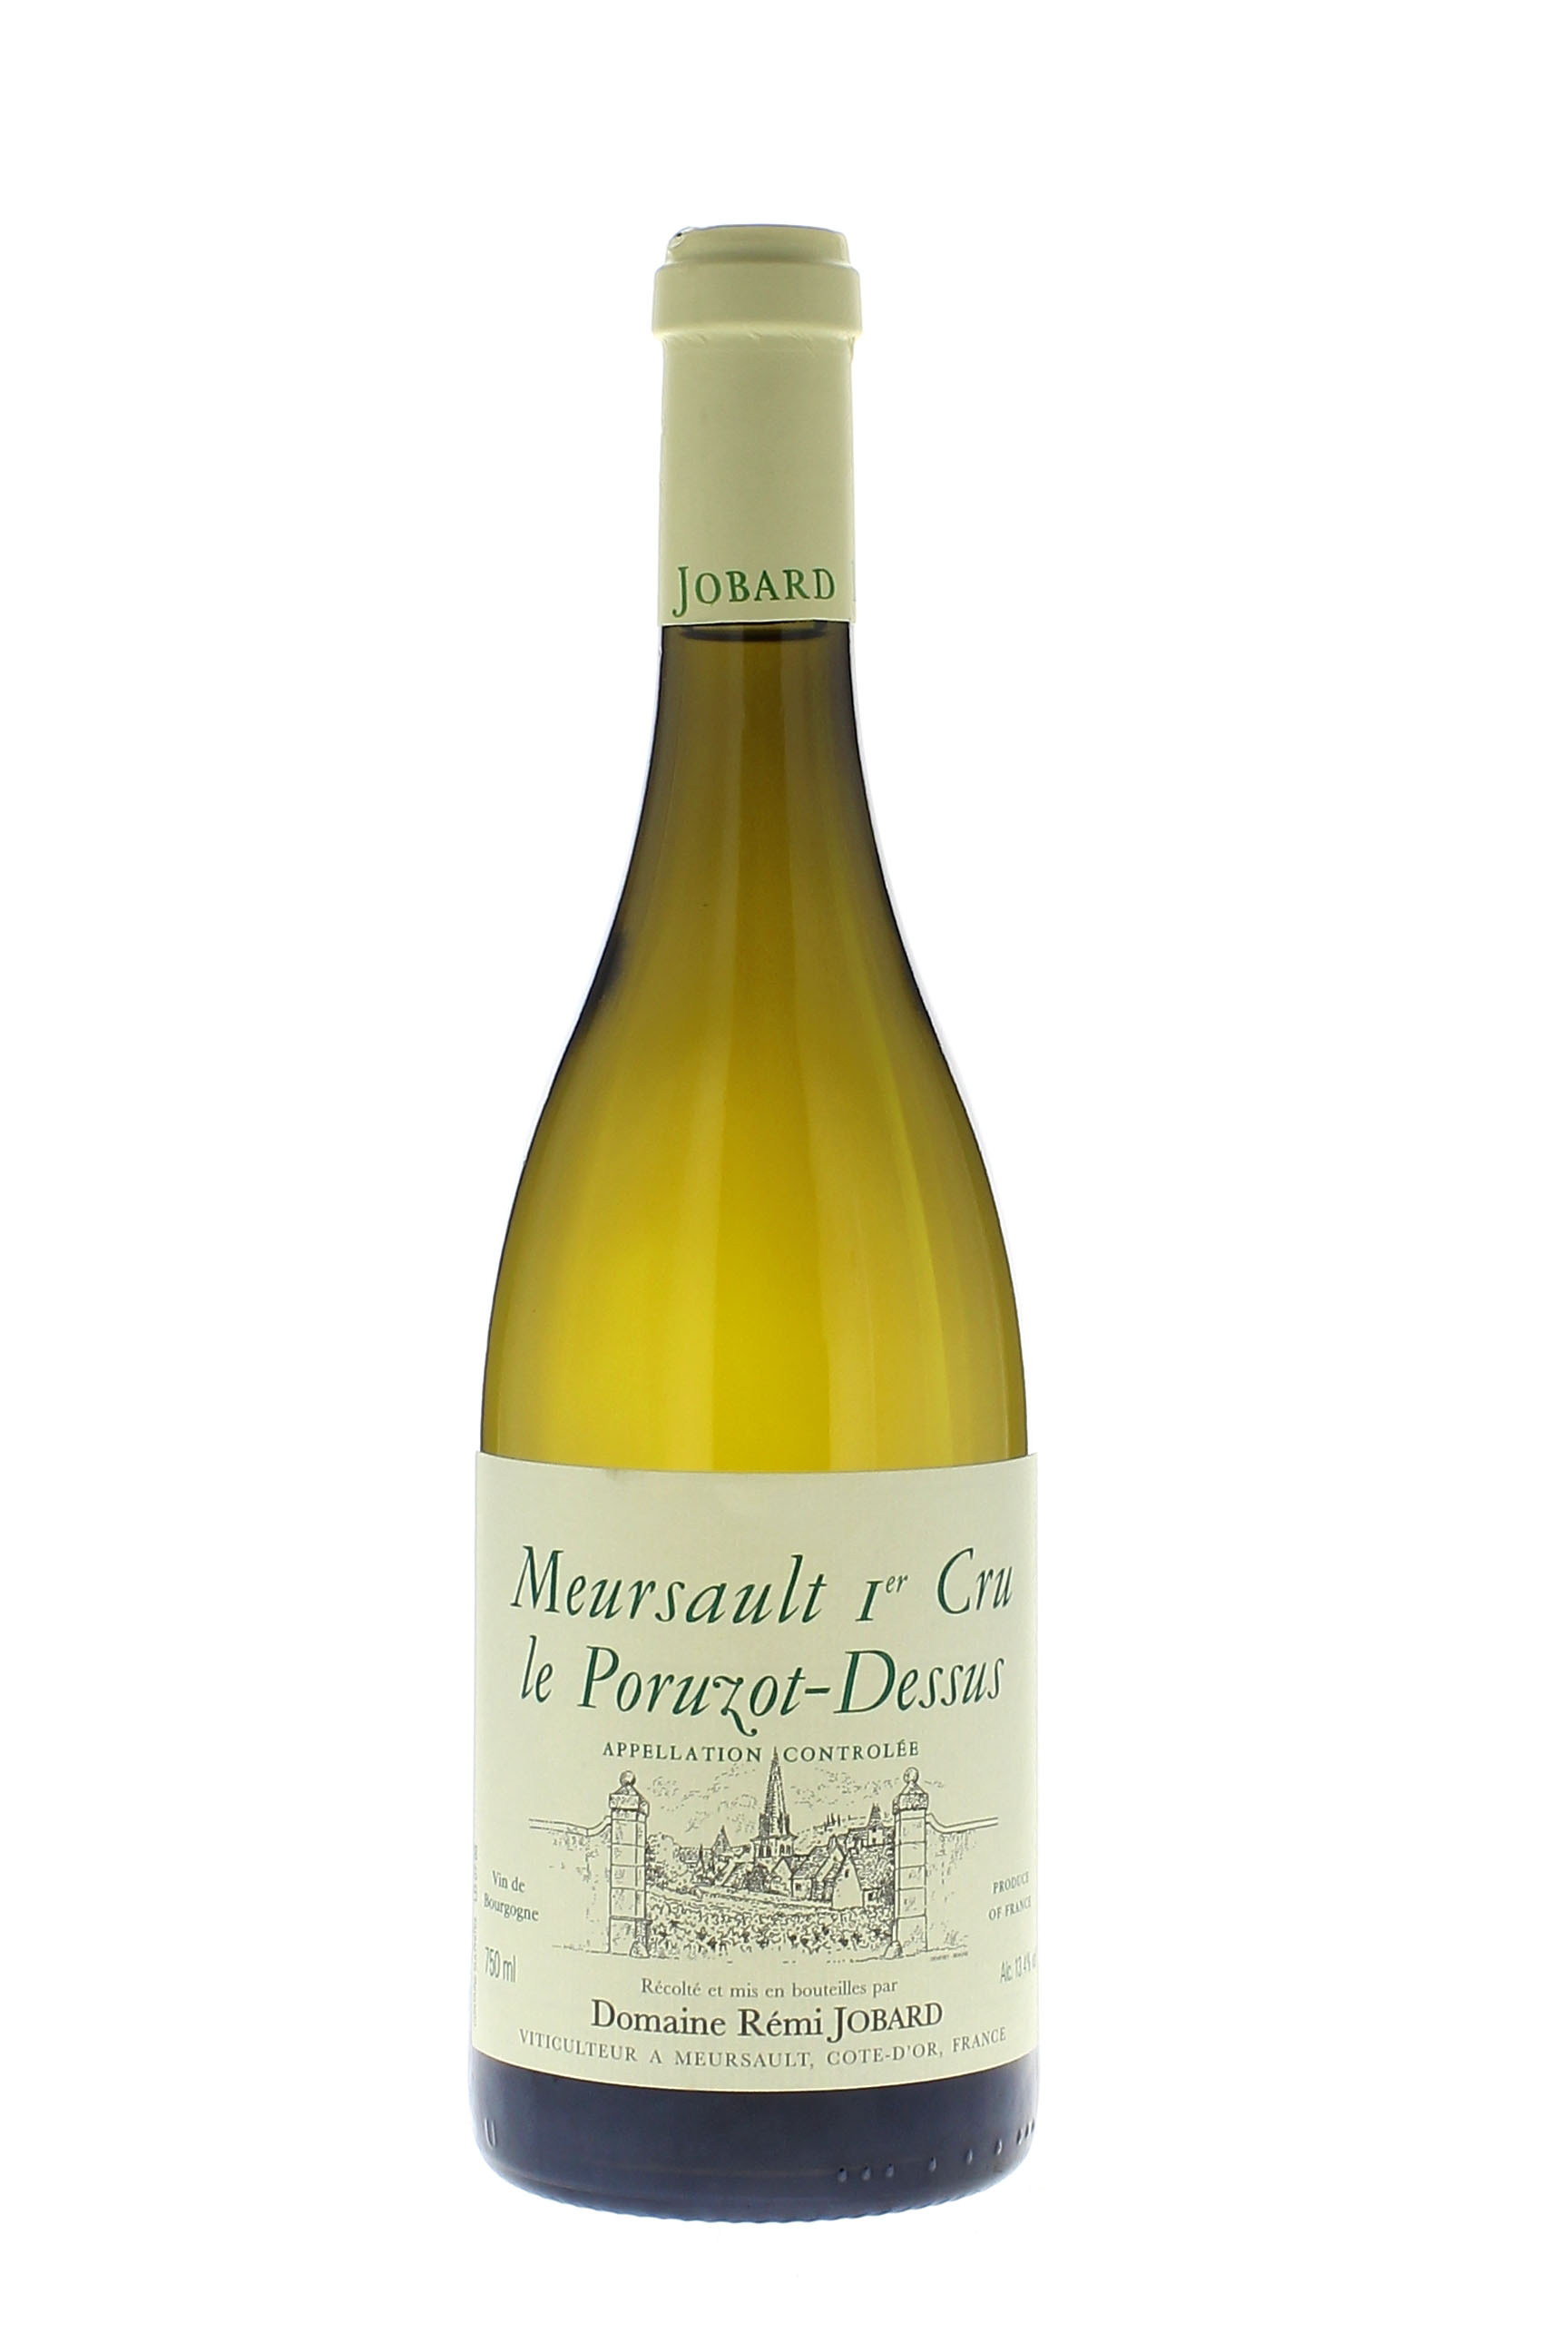 Meursault 1er cru poruzots 2012 Domaine JOBARD, Bourgogne blanc